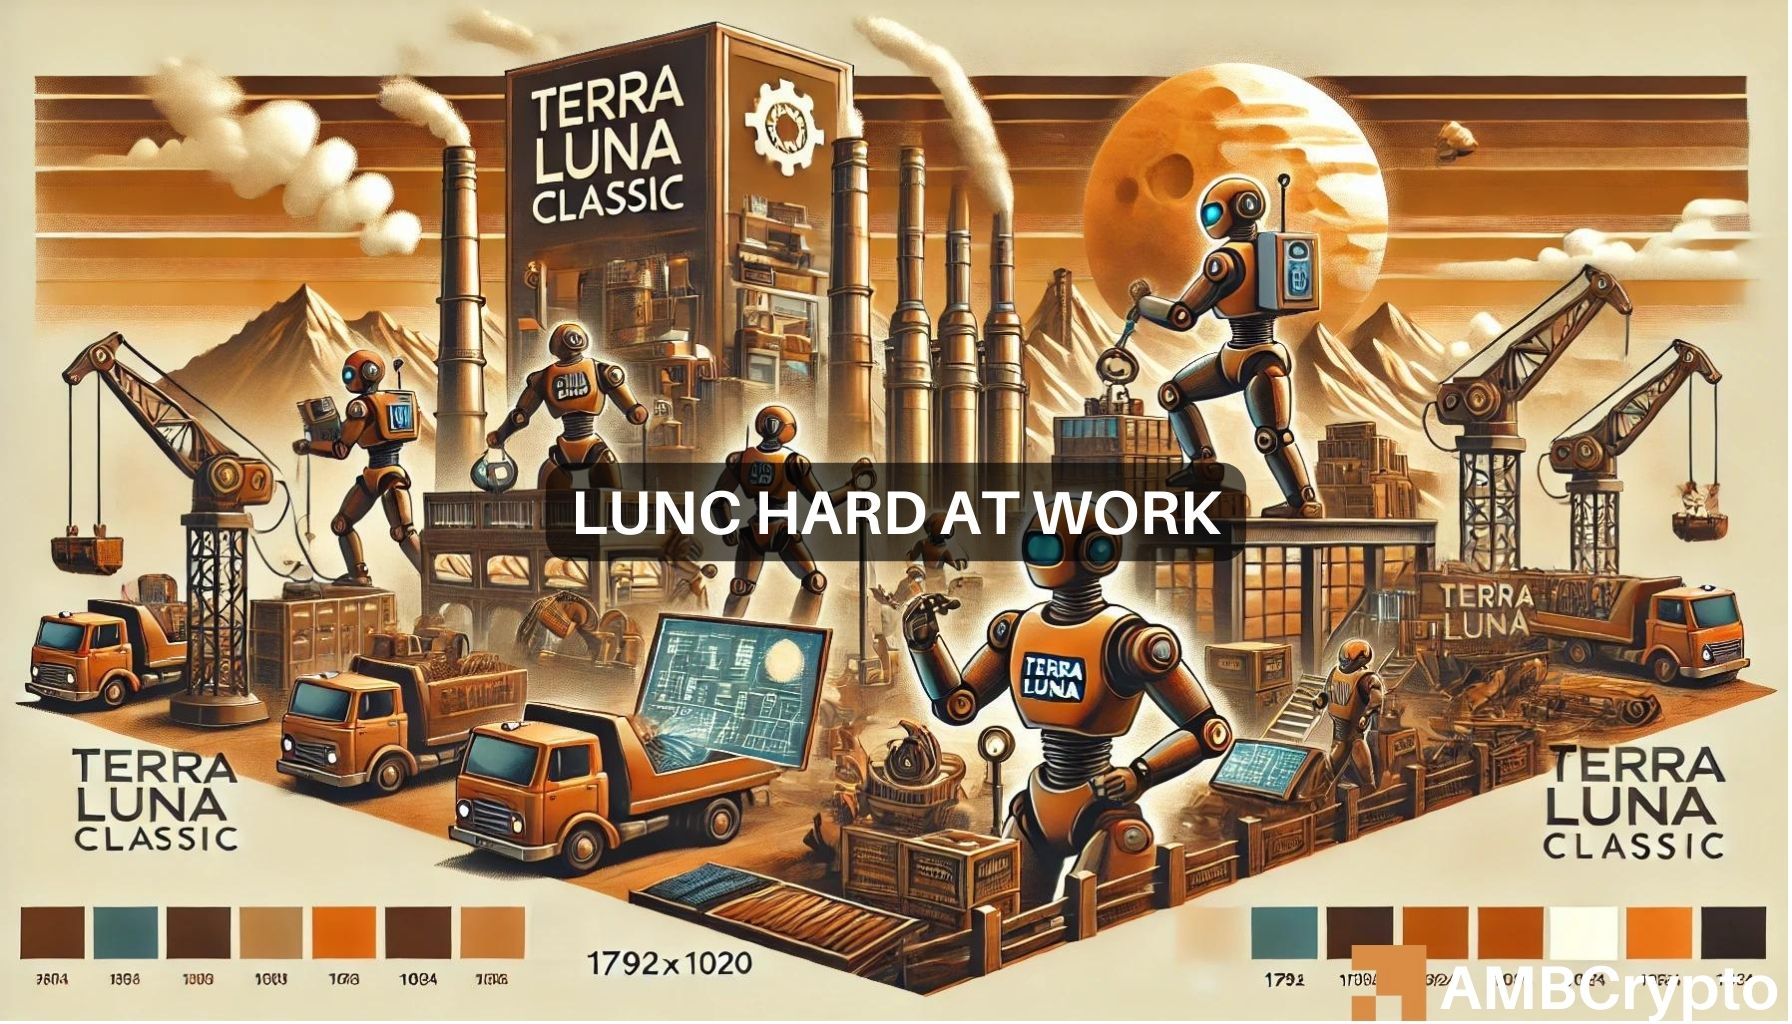 Terra Classic delegates 30M LUNC: Will this help sentiments?